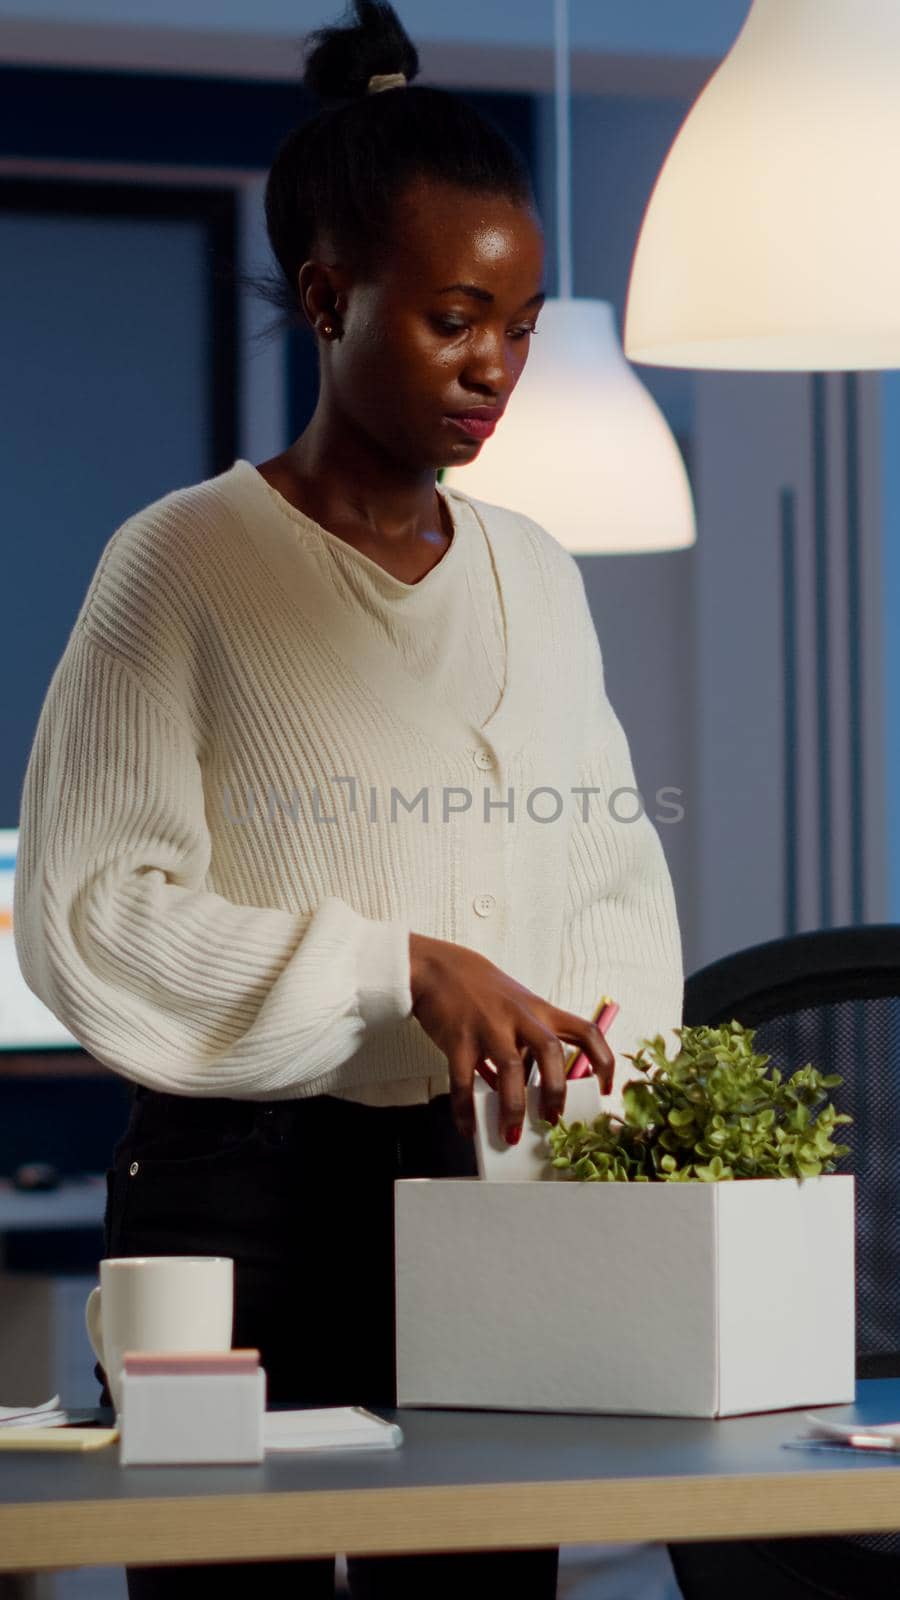 Upset dismissed black woman employee putting stuff in box by DCStudio